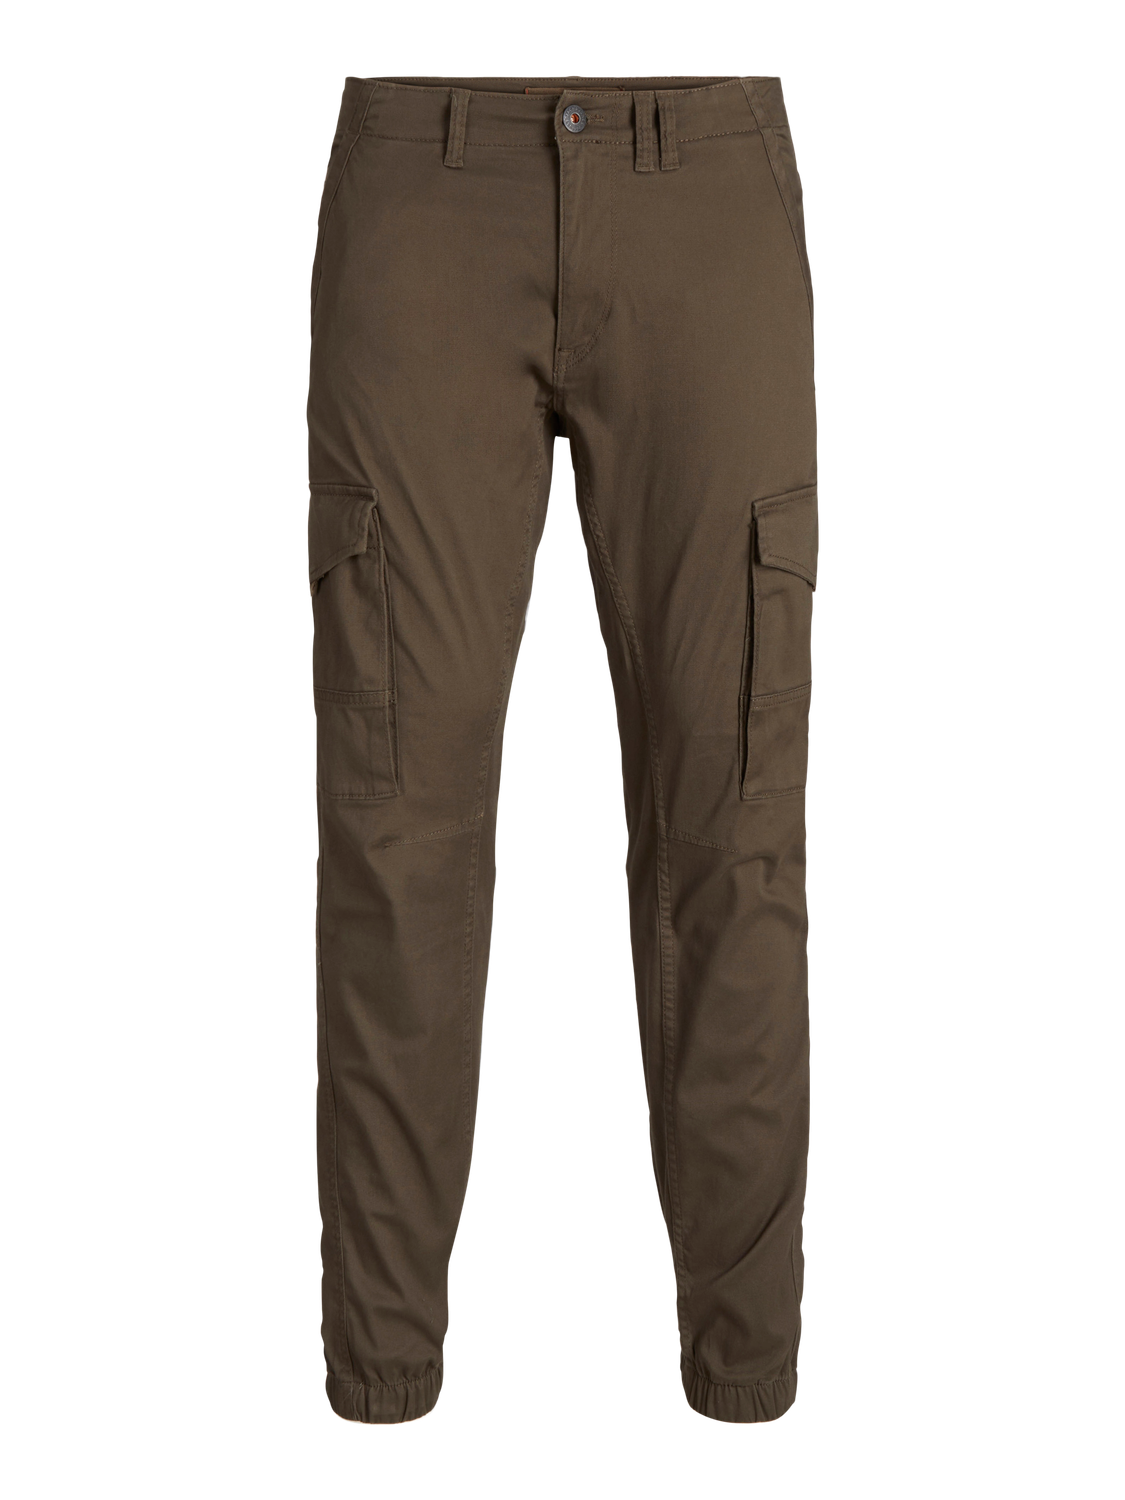 Jack & Jones Slim Fit Cargo trousers -Wren - 12139912